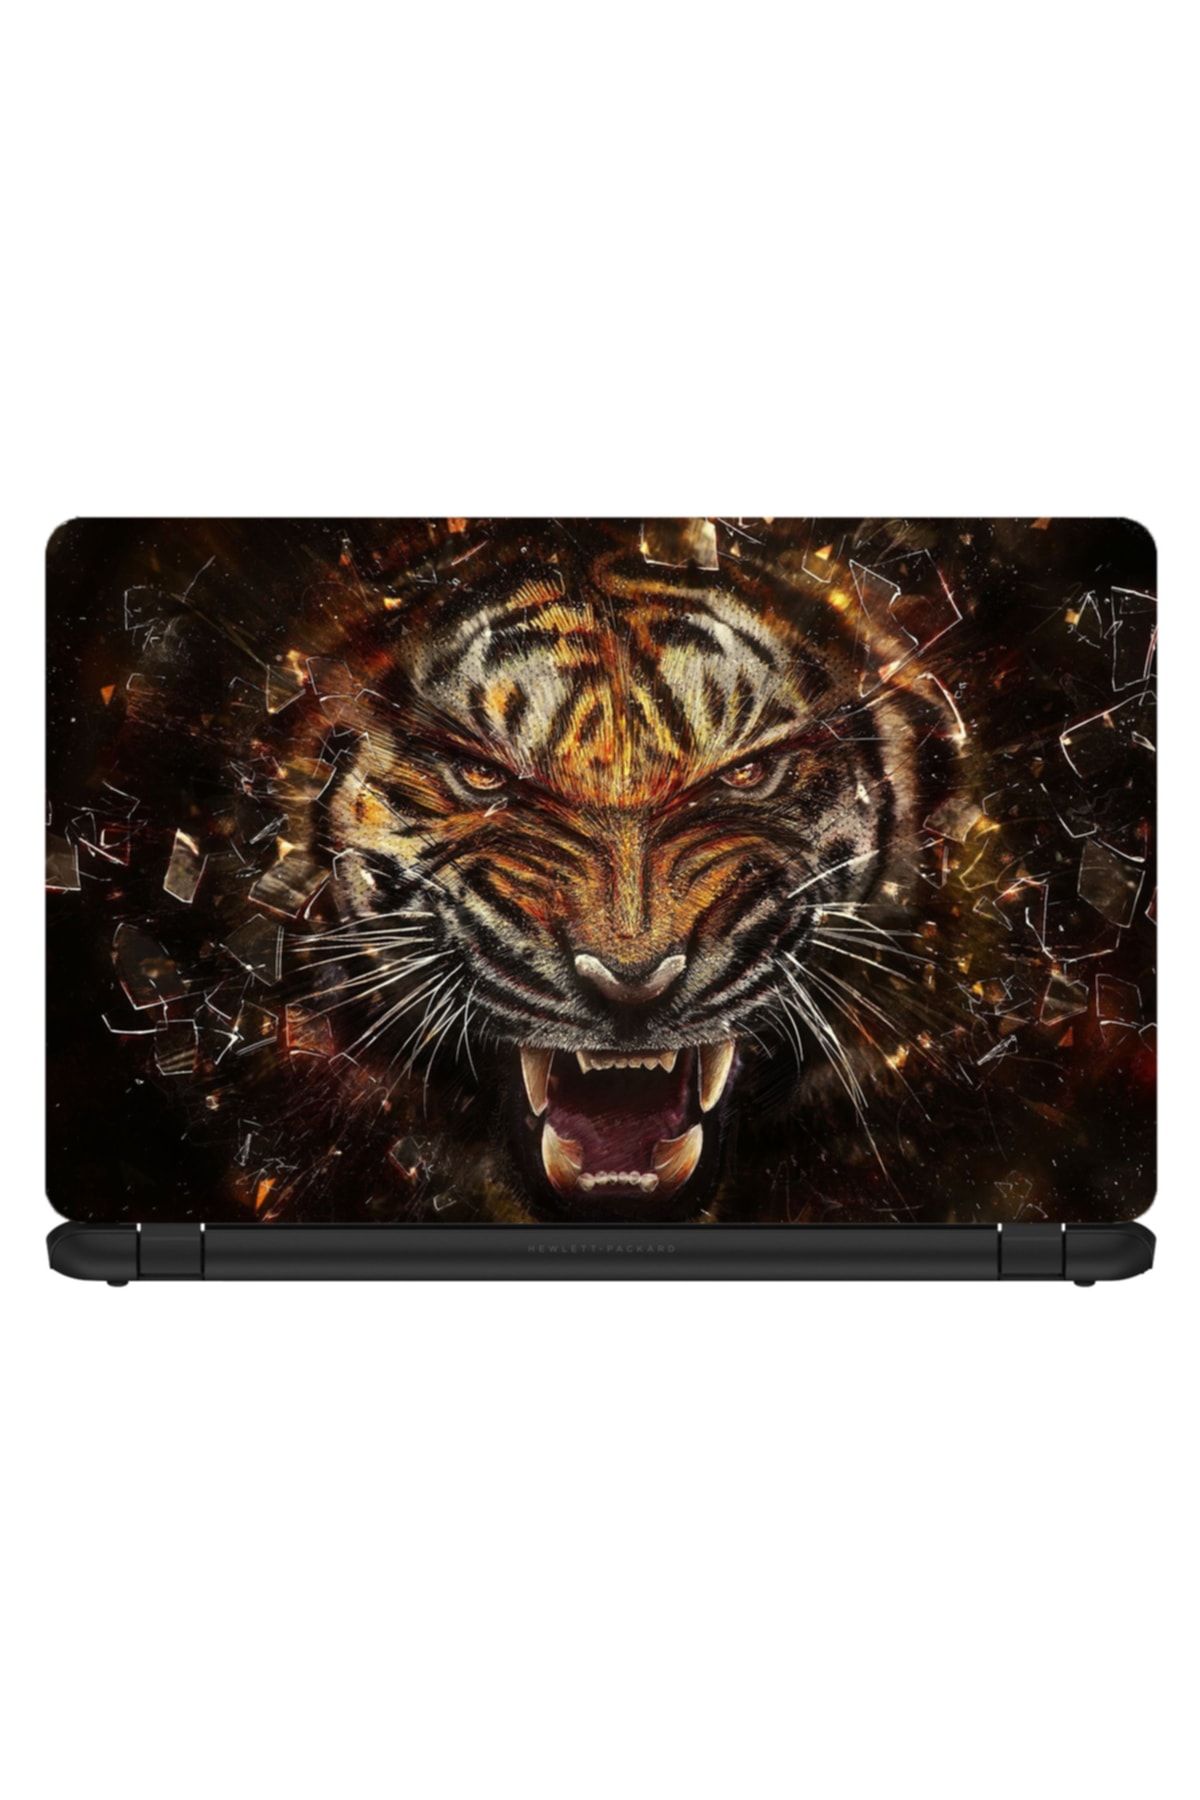 KT Decor Tiger Explotion Laptop Sticker 15.6 Inch